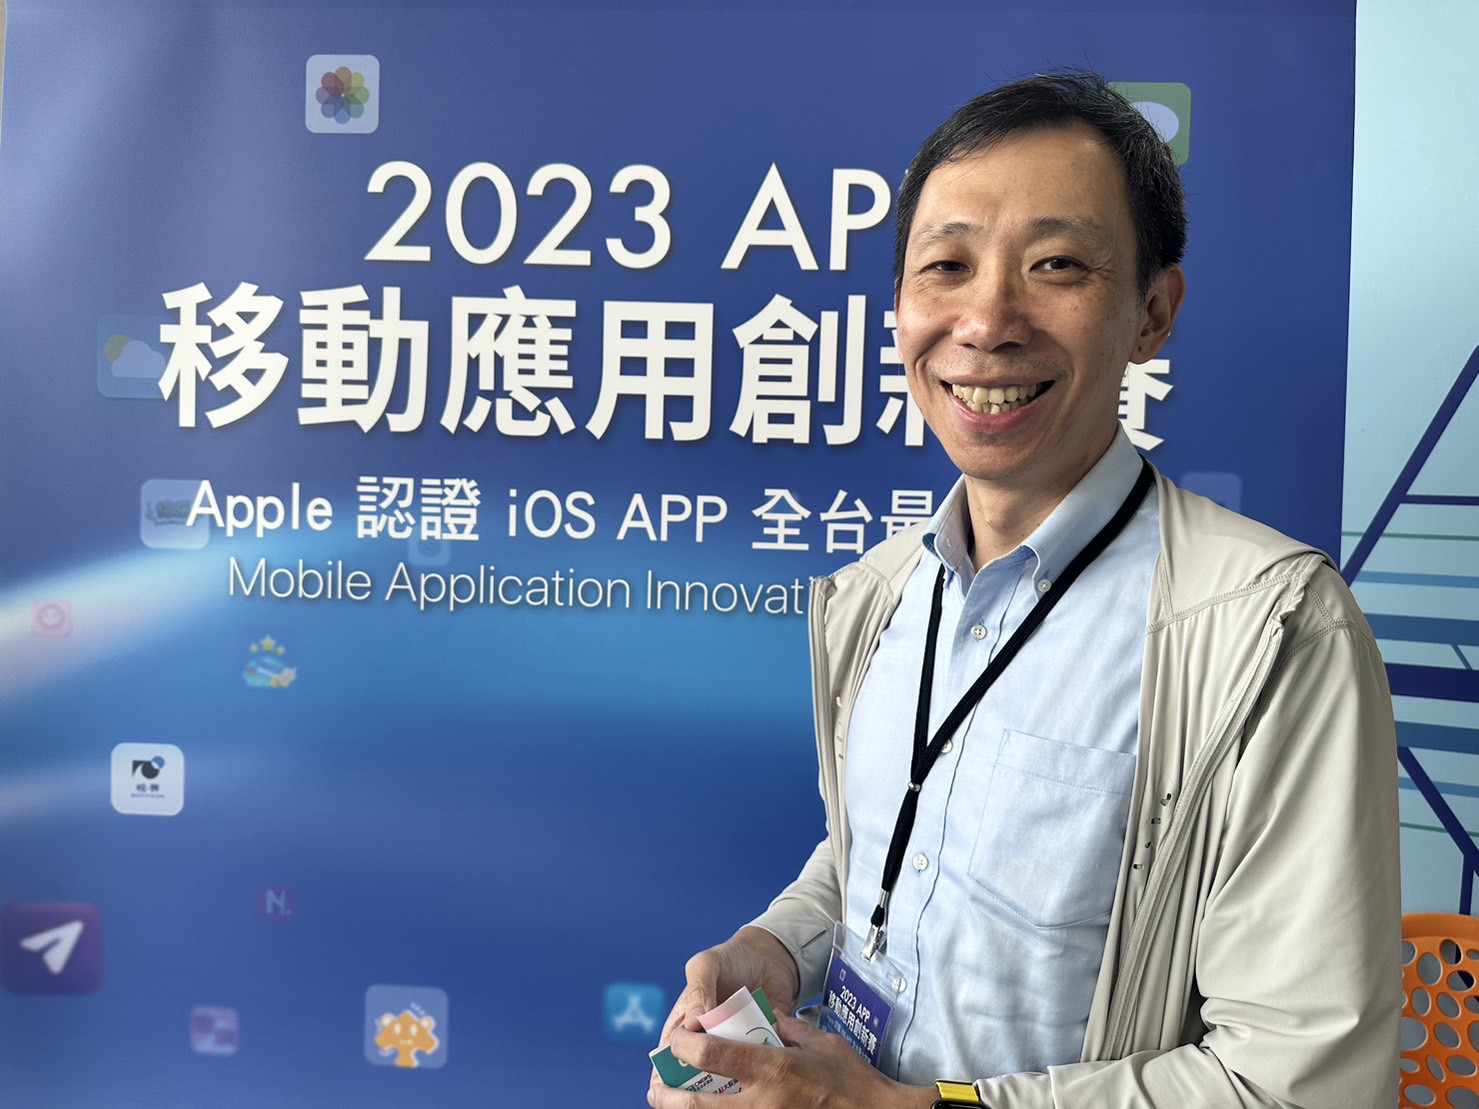 【2023 APP 移動應用創新賽】全台最大Apple iOS App競賽登場 評審長王志強揭本屆開發者與前屆2差異